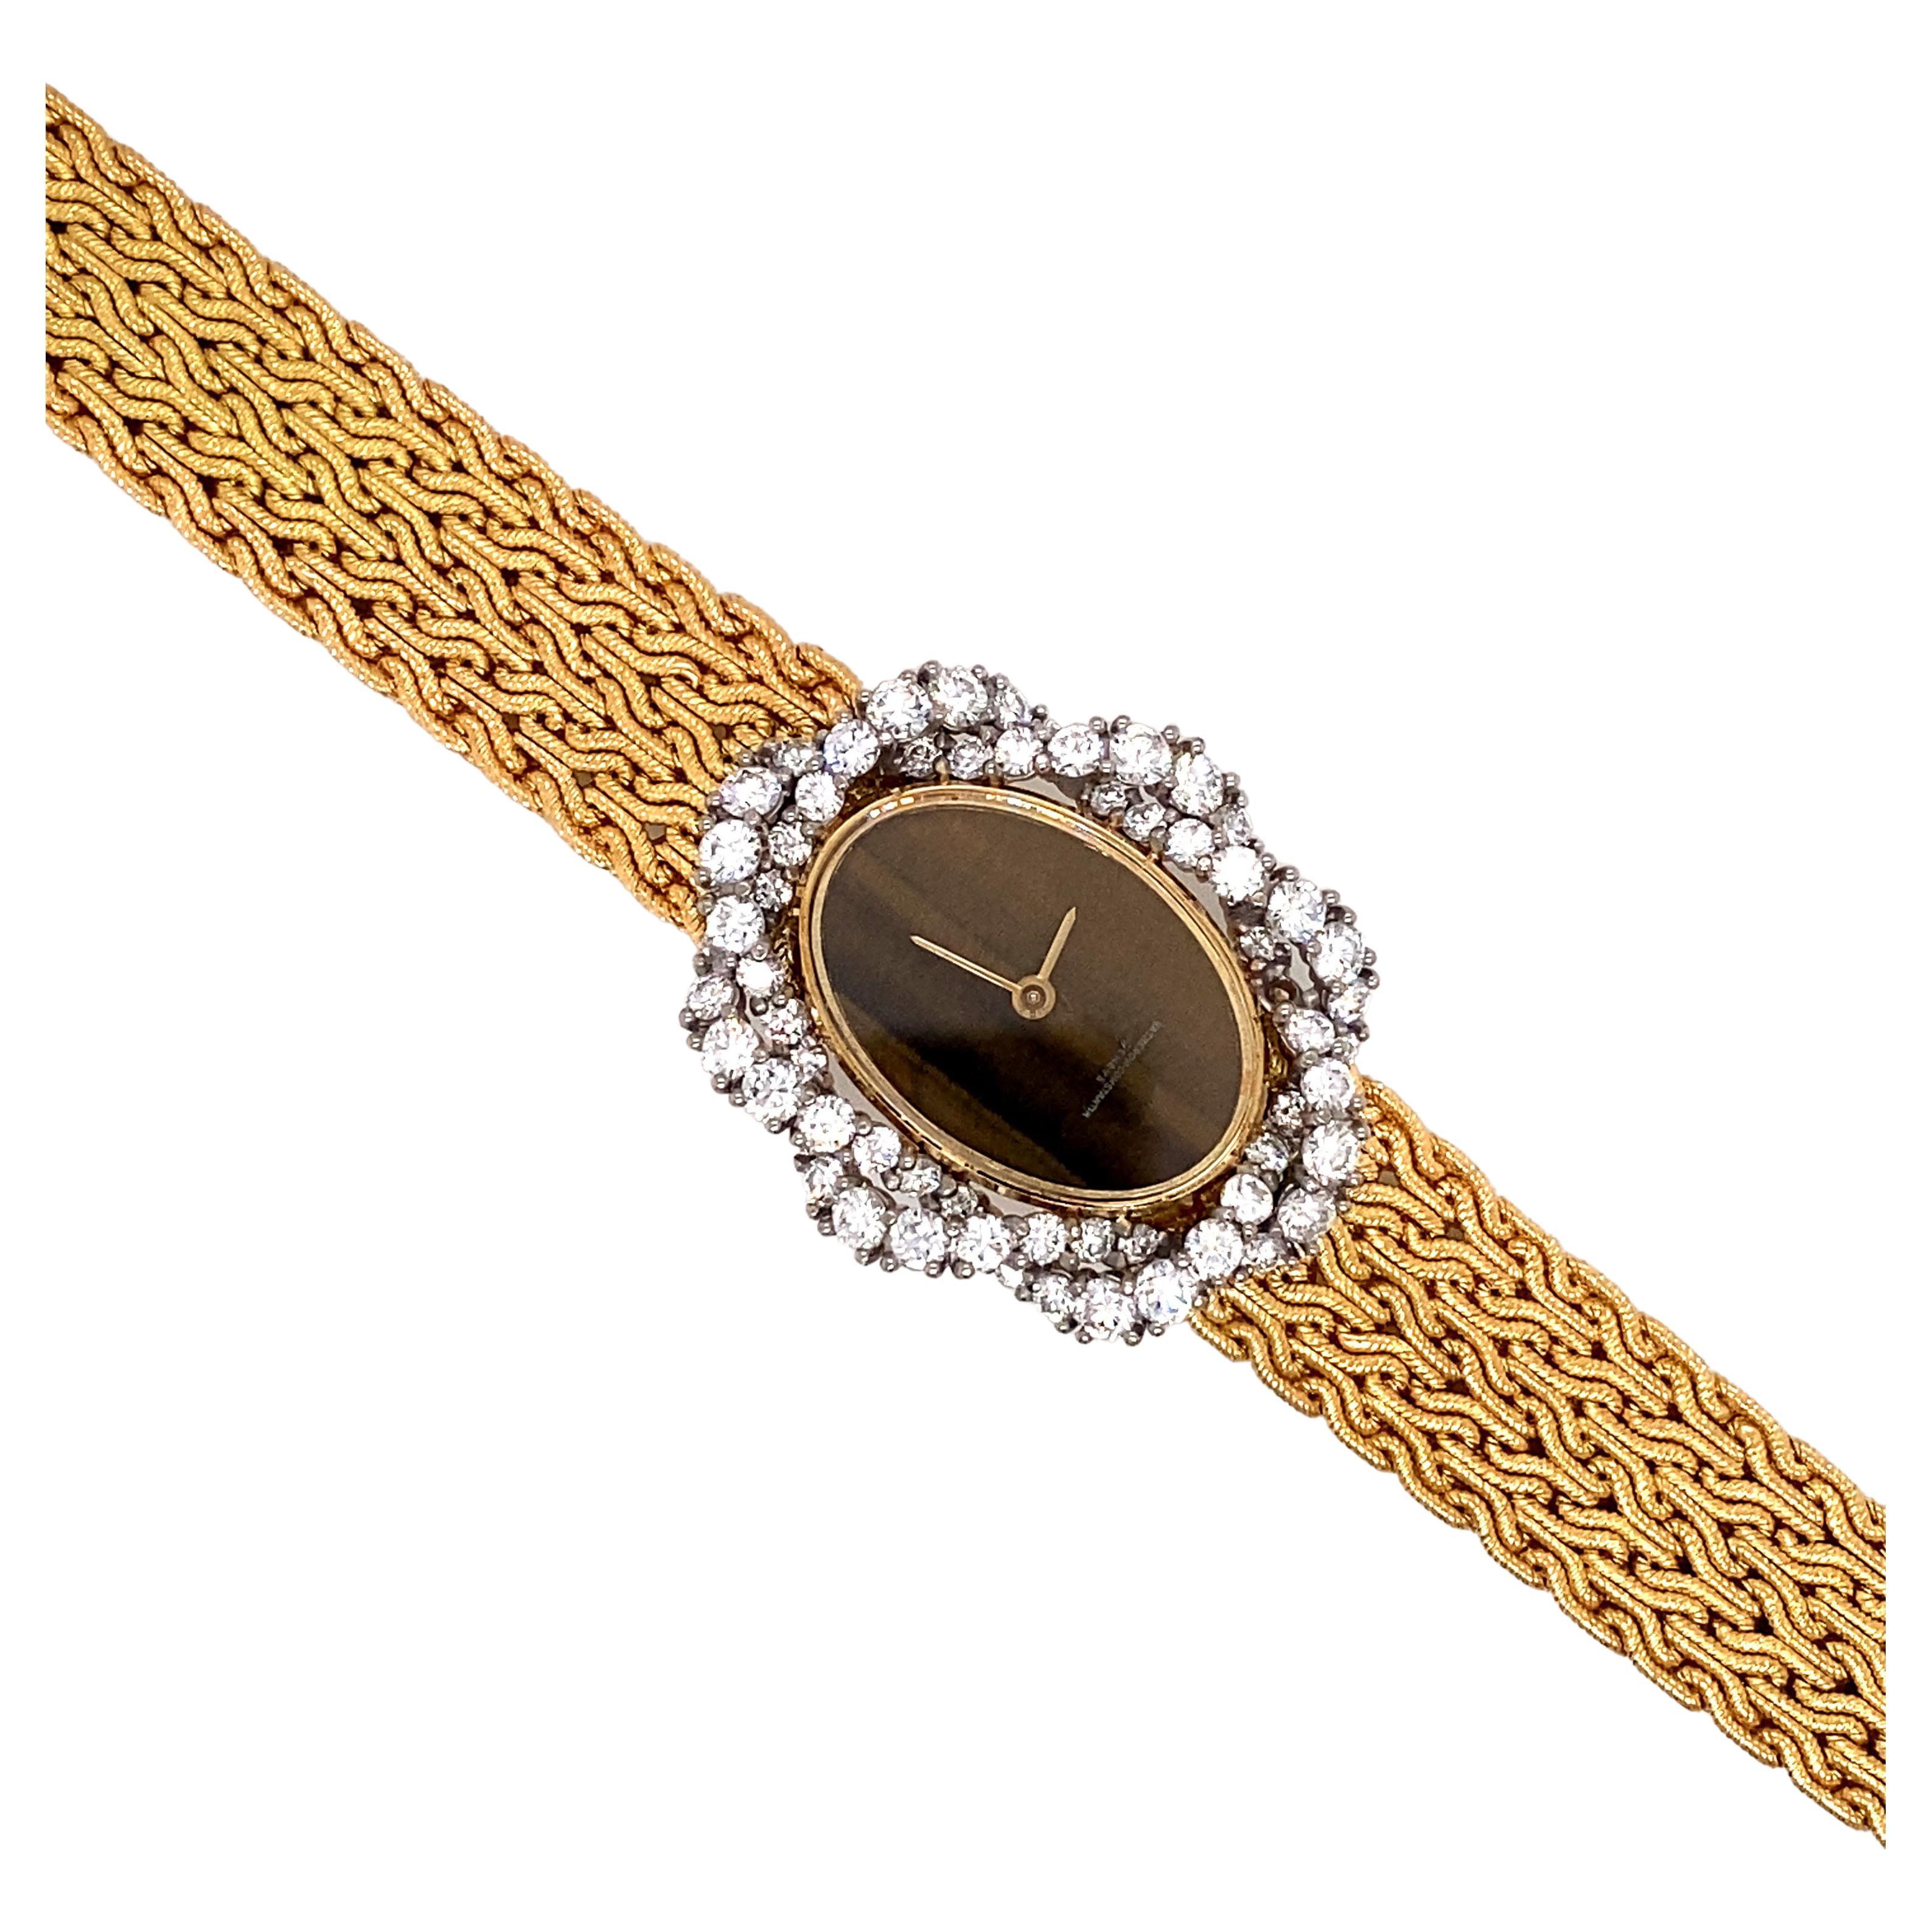 1965 Vacheron Constantin for Chaumet Tiger Eye Dial Diamond Wrist Watch 